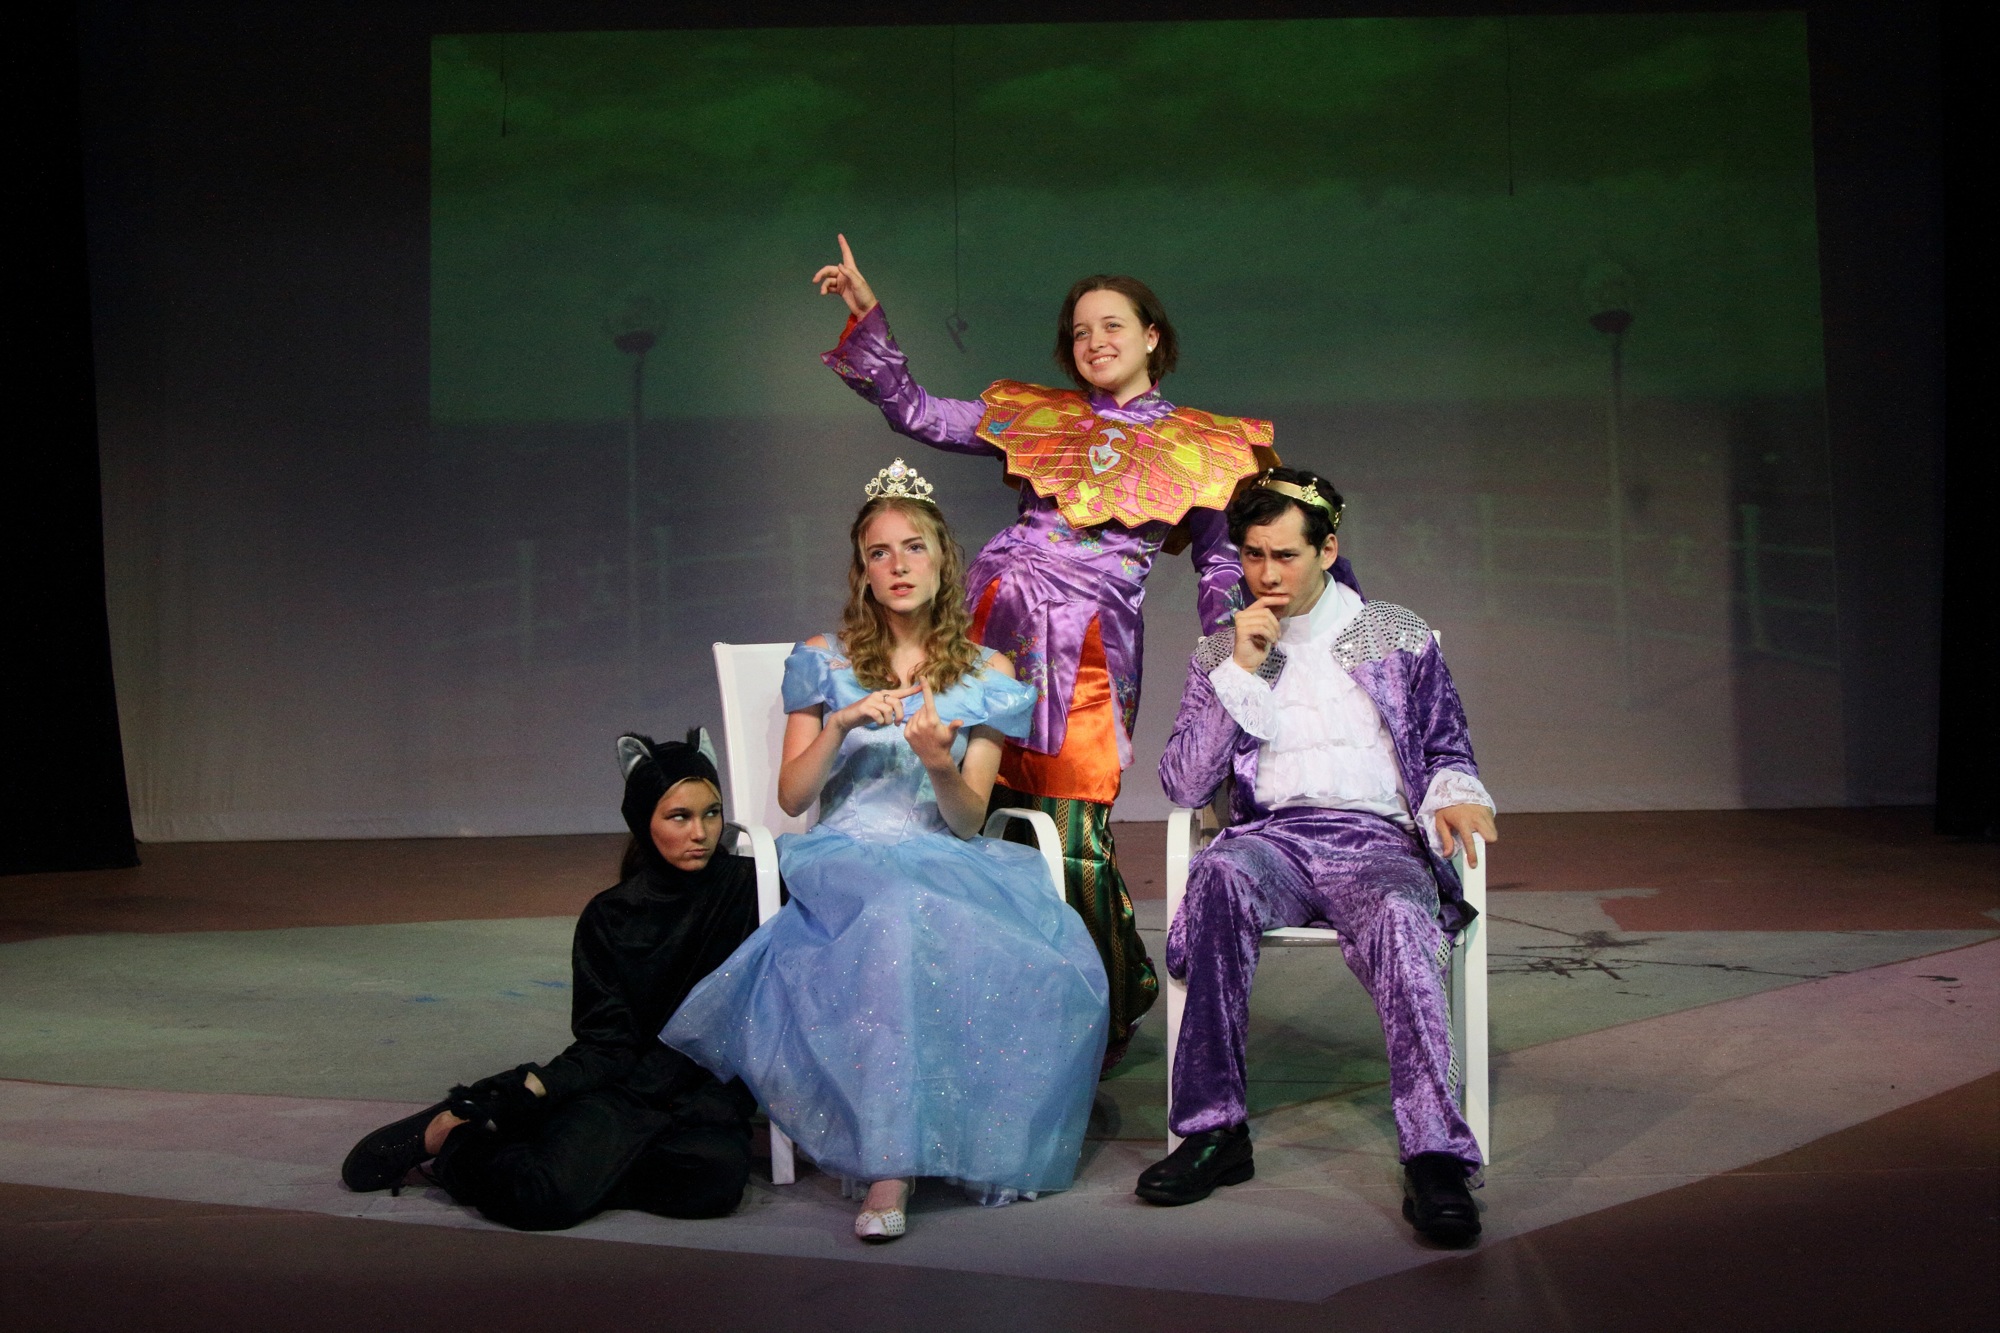 Carma Raymond, as Cat, Sadie Martin as Cinderella, Madelyn Stark as Twanky and Joshua Lingo as Prince Charming. Photo courtesy of Candace Davis